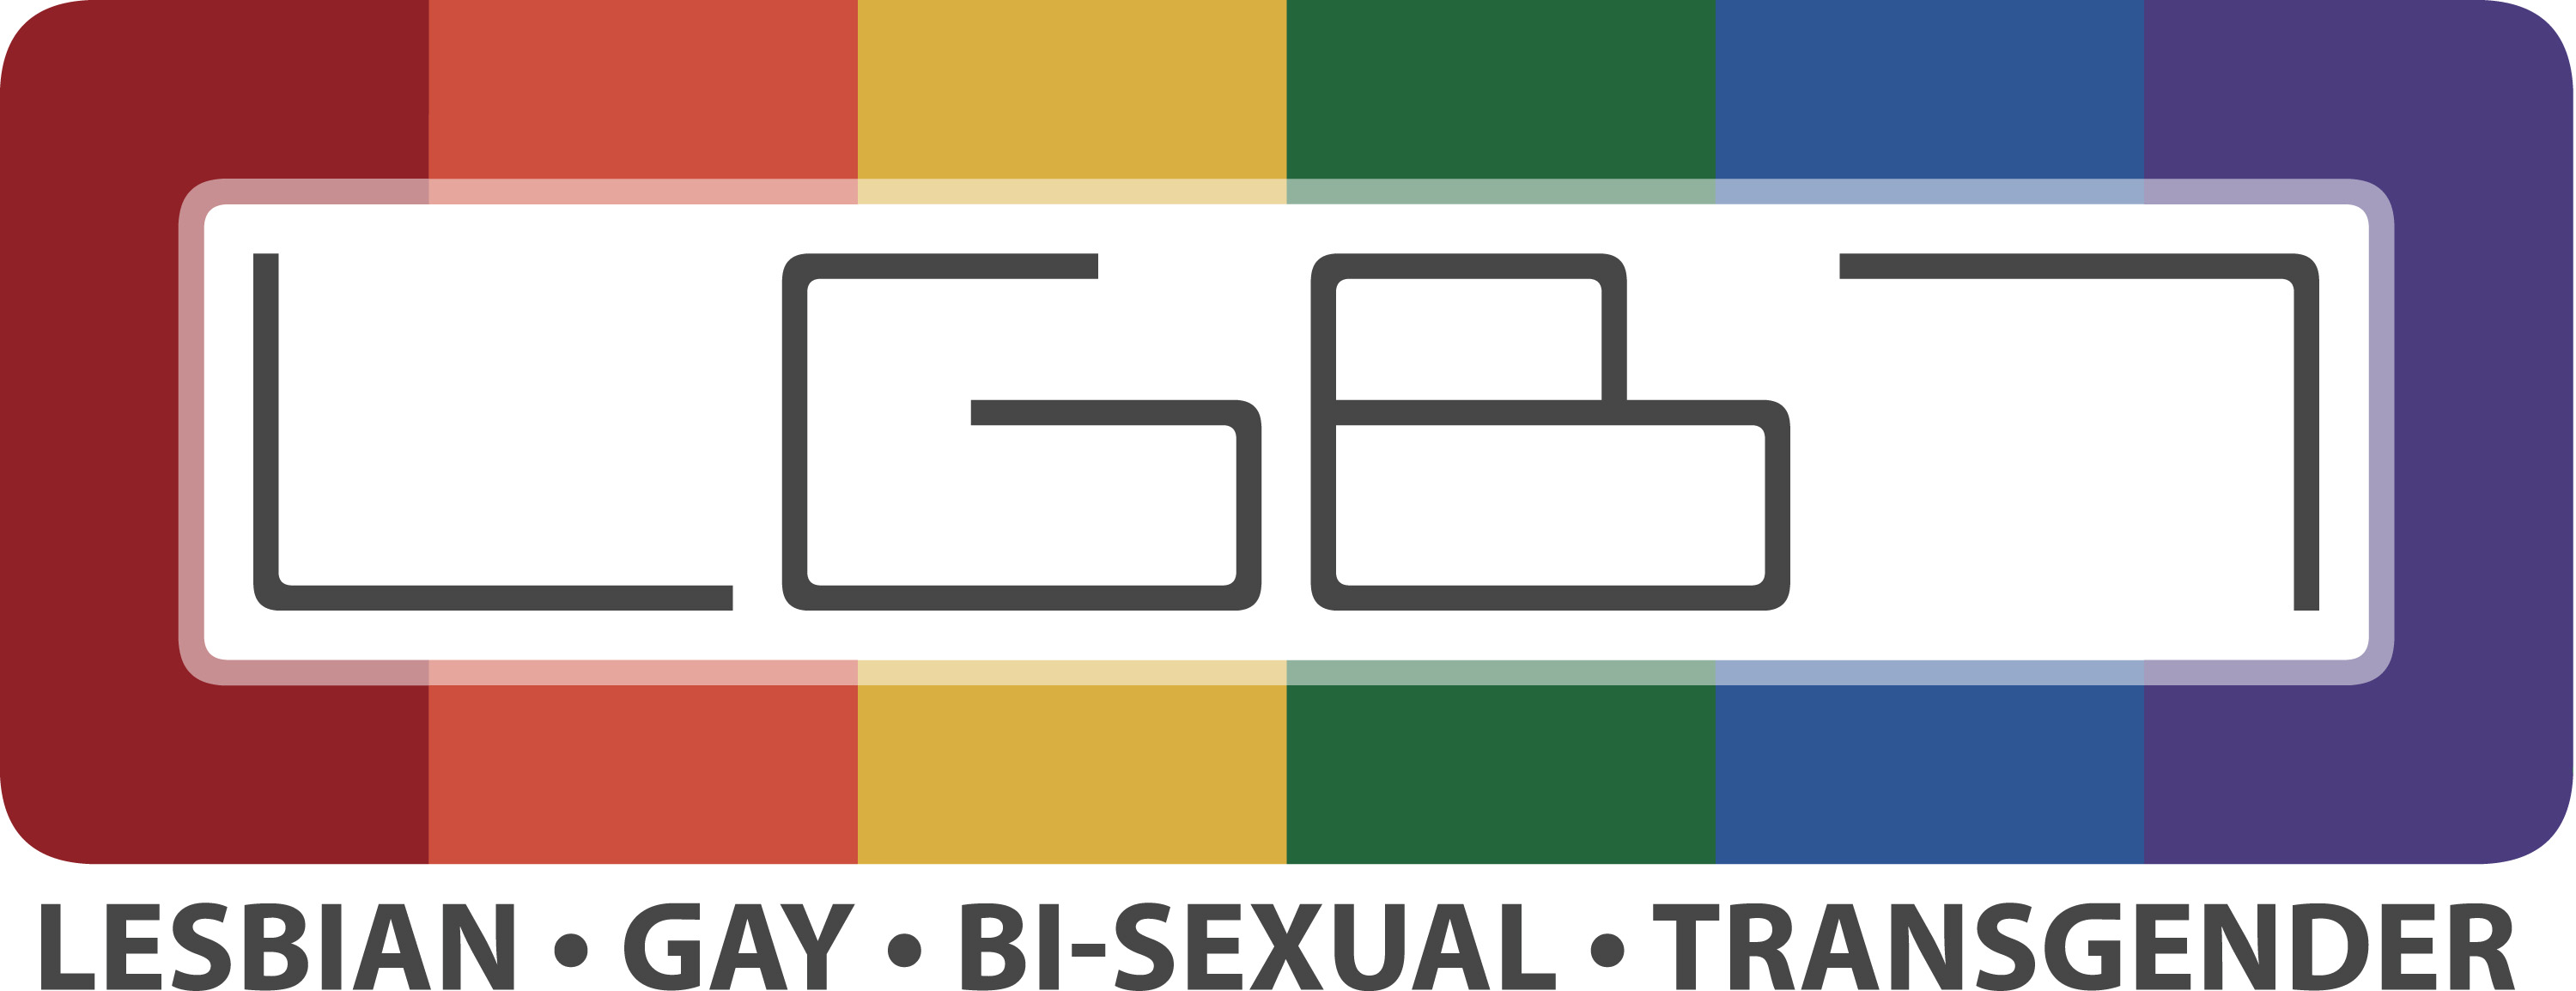 LGBT_Banner.jpg